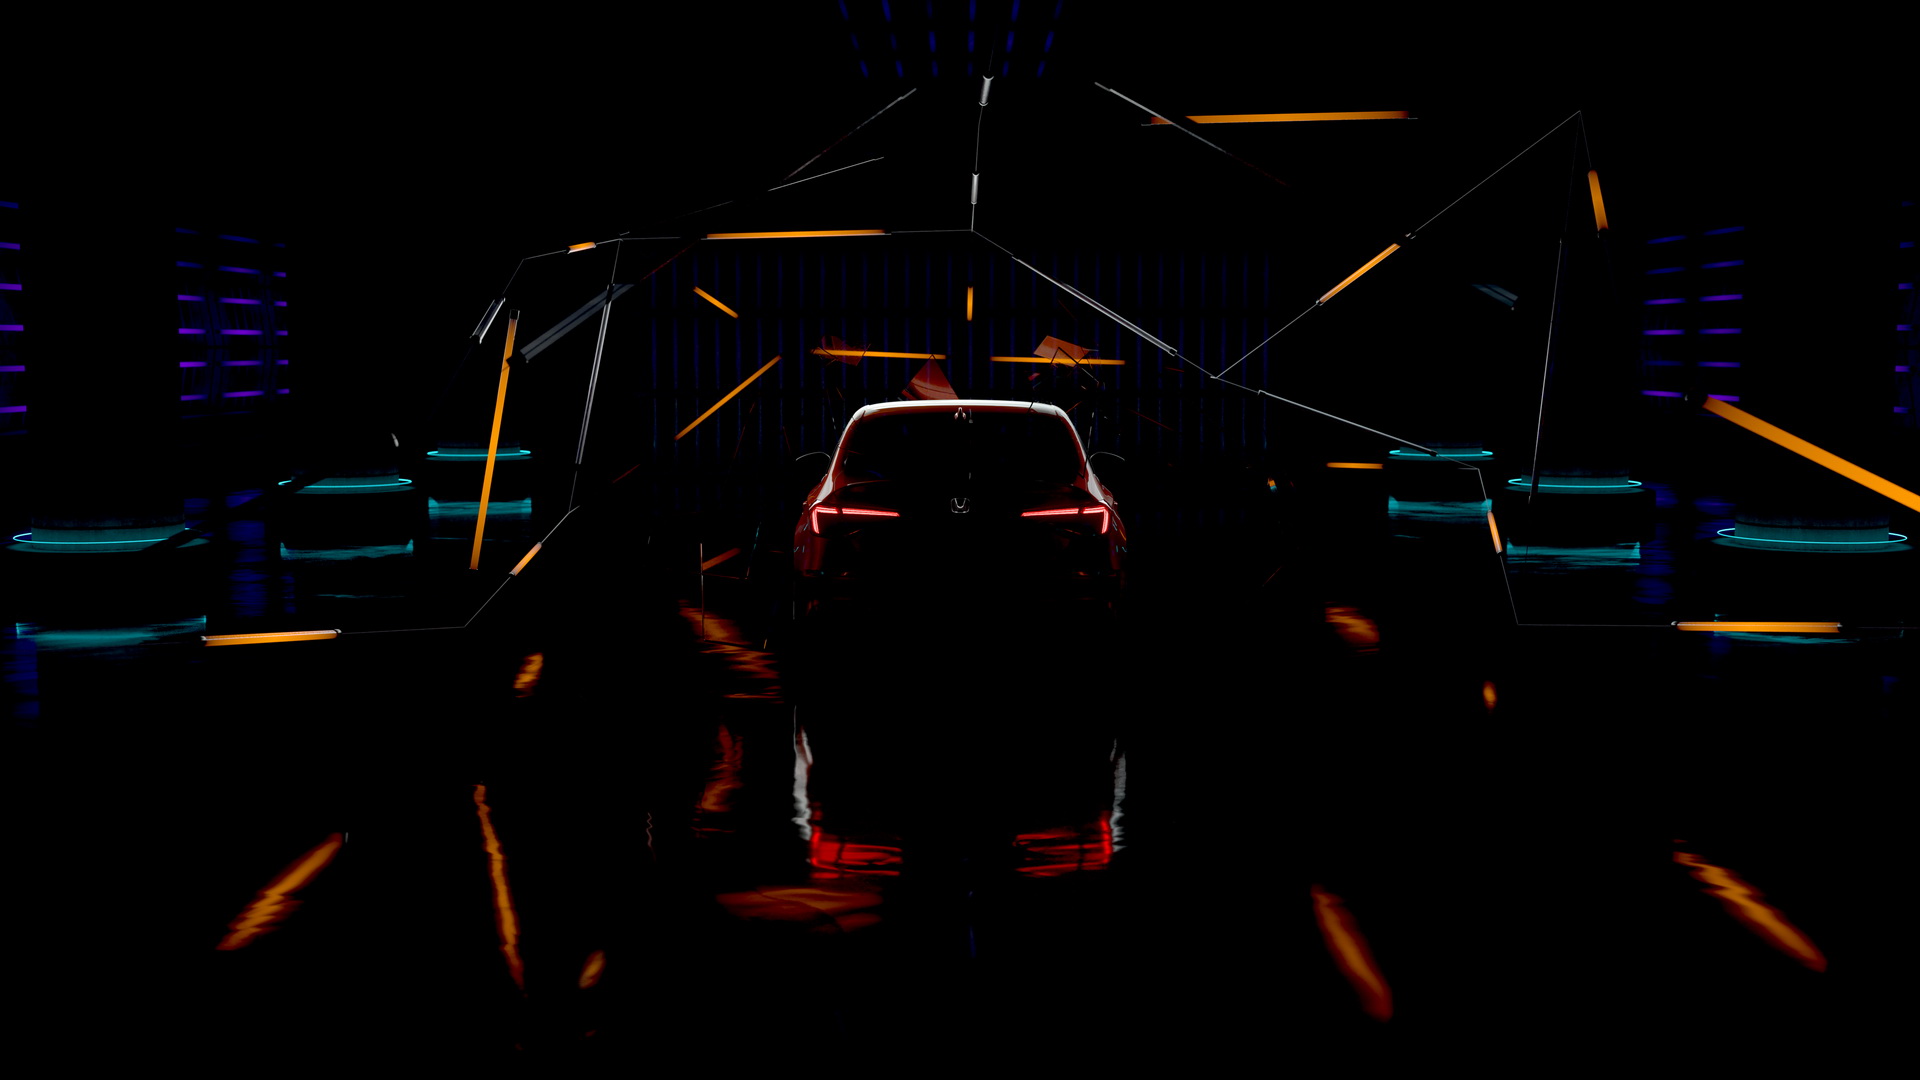 2022 Honda Civic Sedan resim galerisi (15.11.2020)